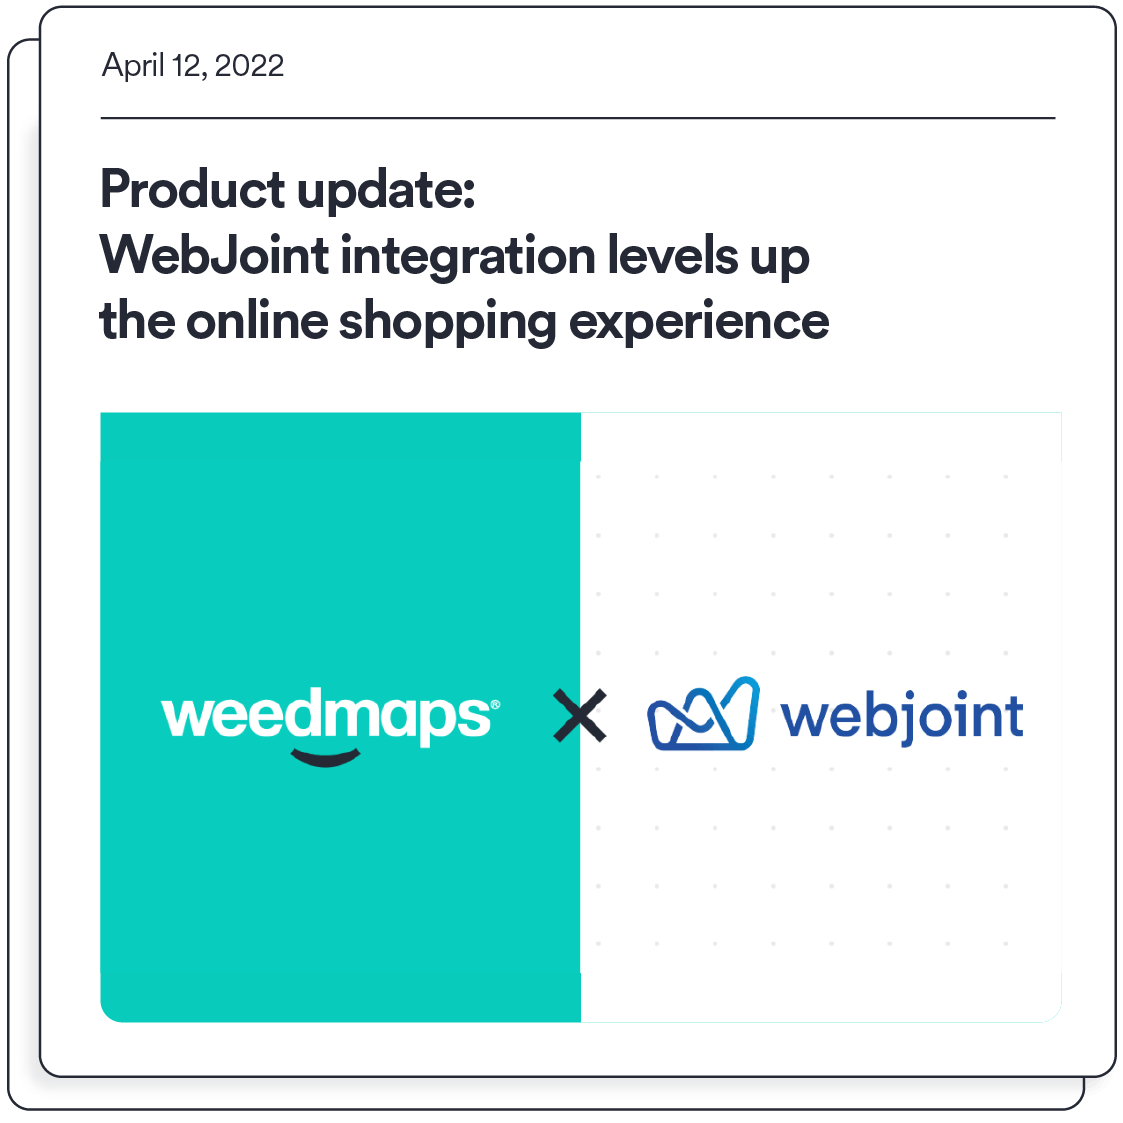 Weedmaps and WebJoint